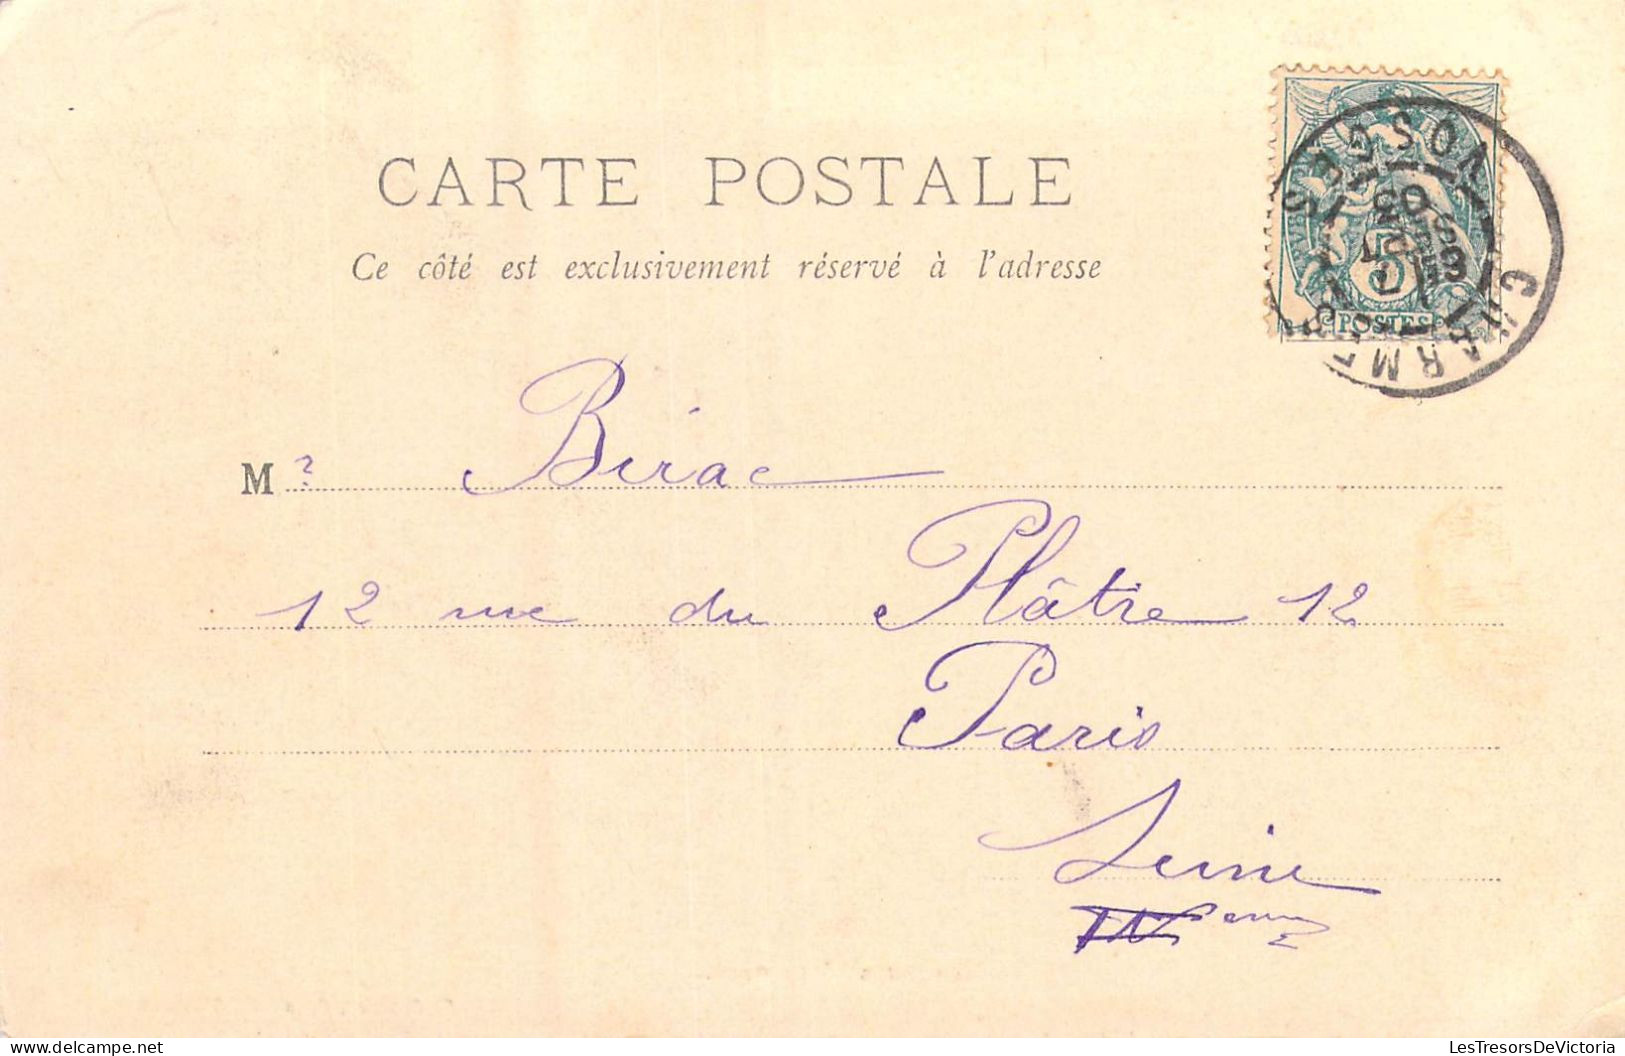 FRANCE - 88 - Charmes - Le Pont - Carte Postale Ancienne - Charmes